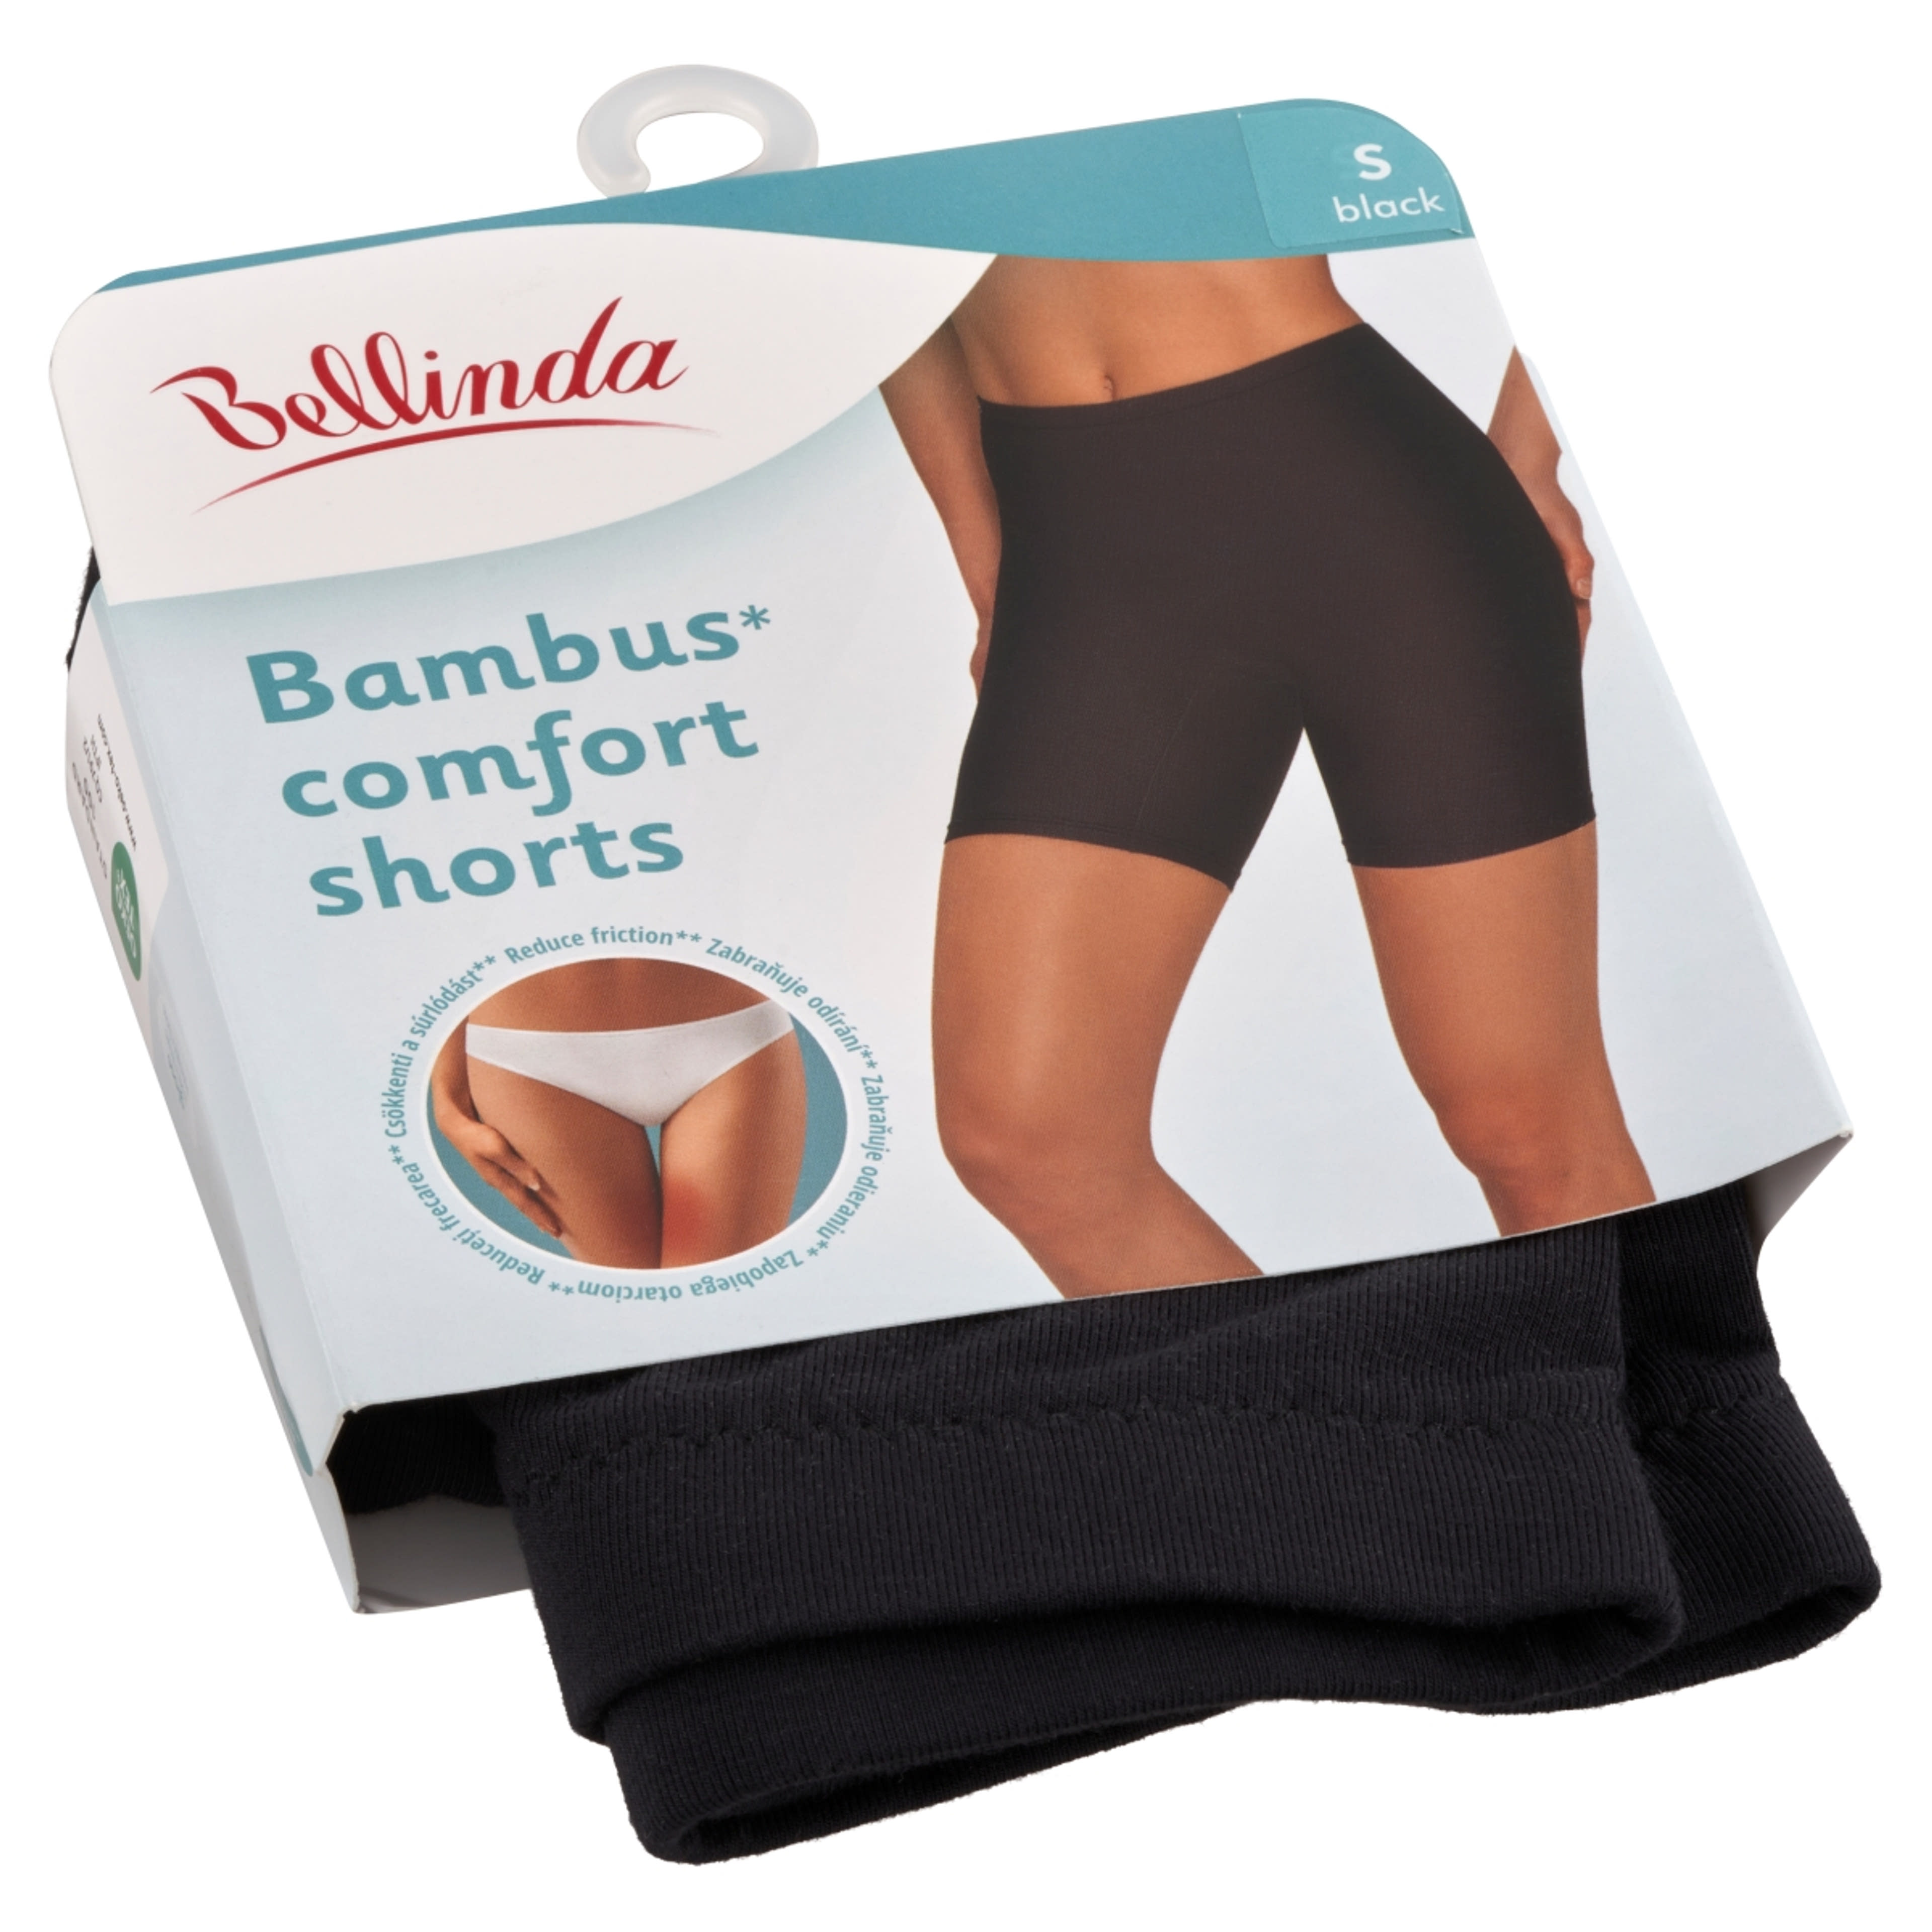 Bellinda Bambus Comfort short fekete S-es méret - 1 db-2